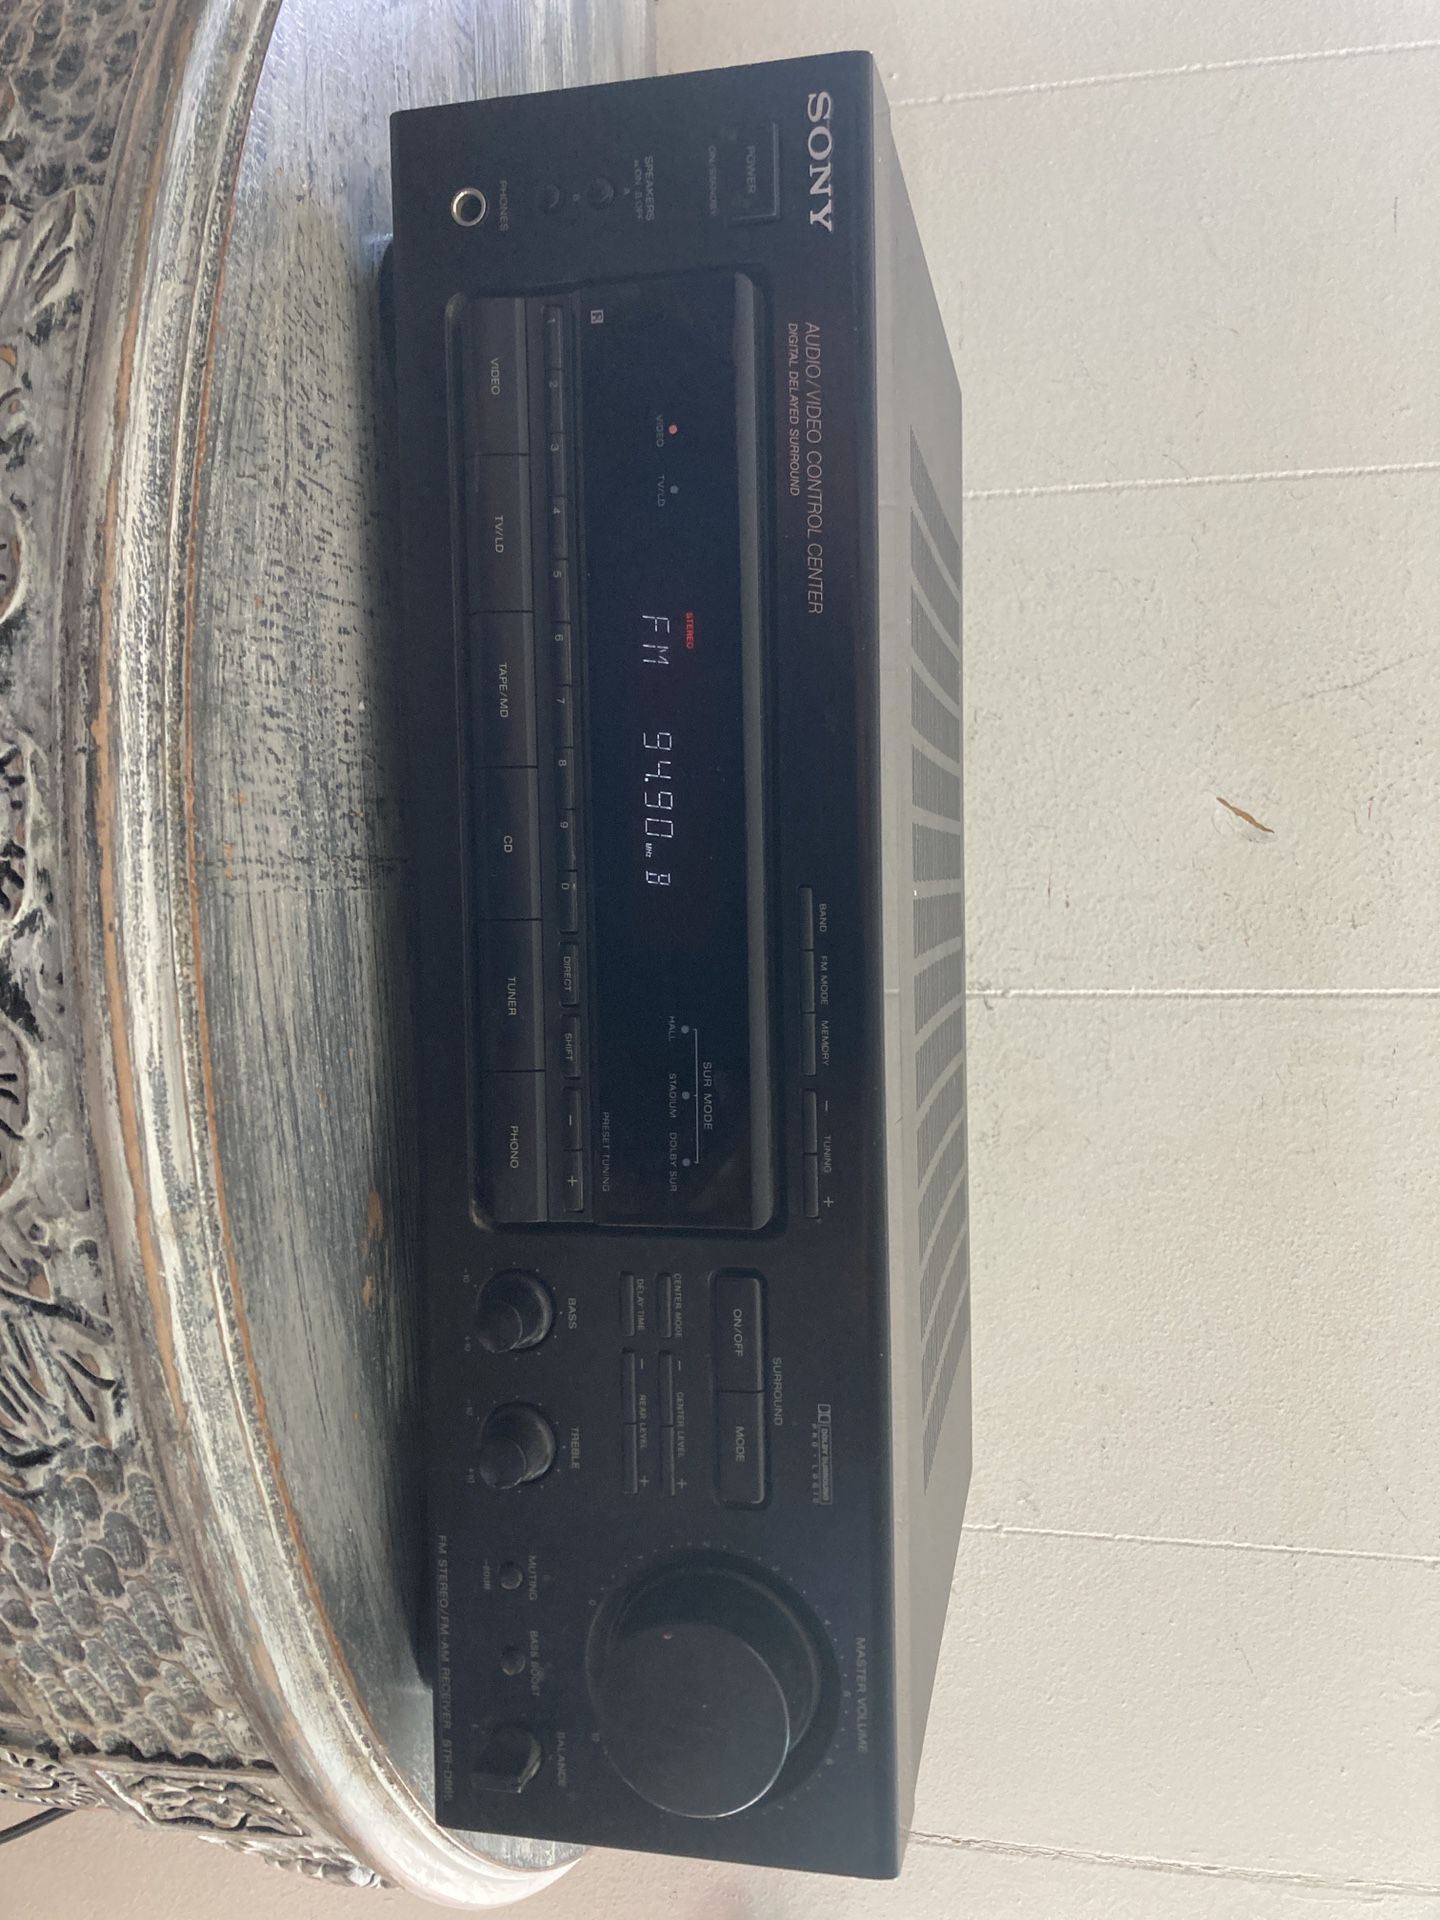 Sony STR-D665 AM/FM Stereo Receiver